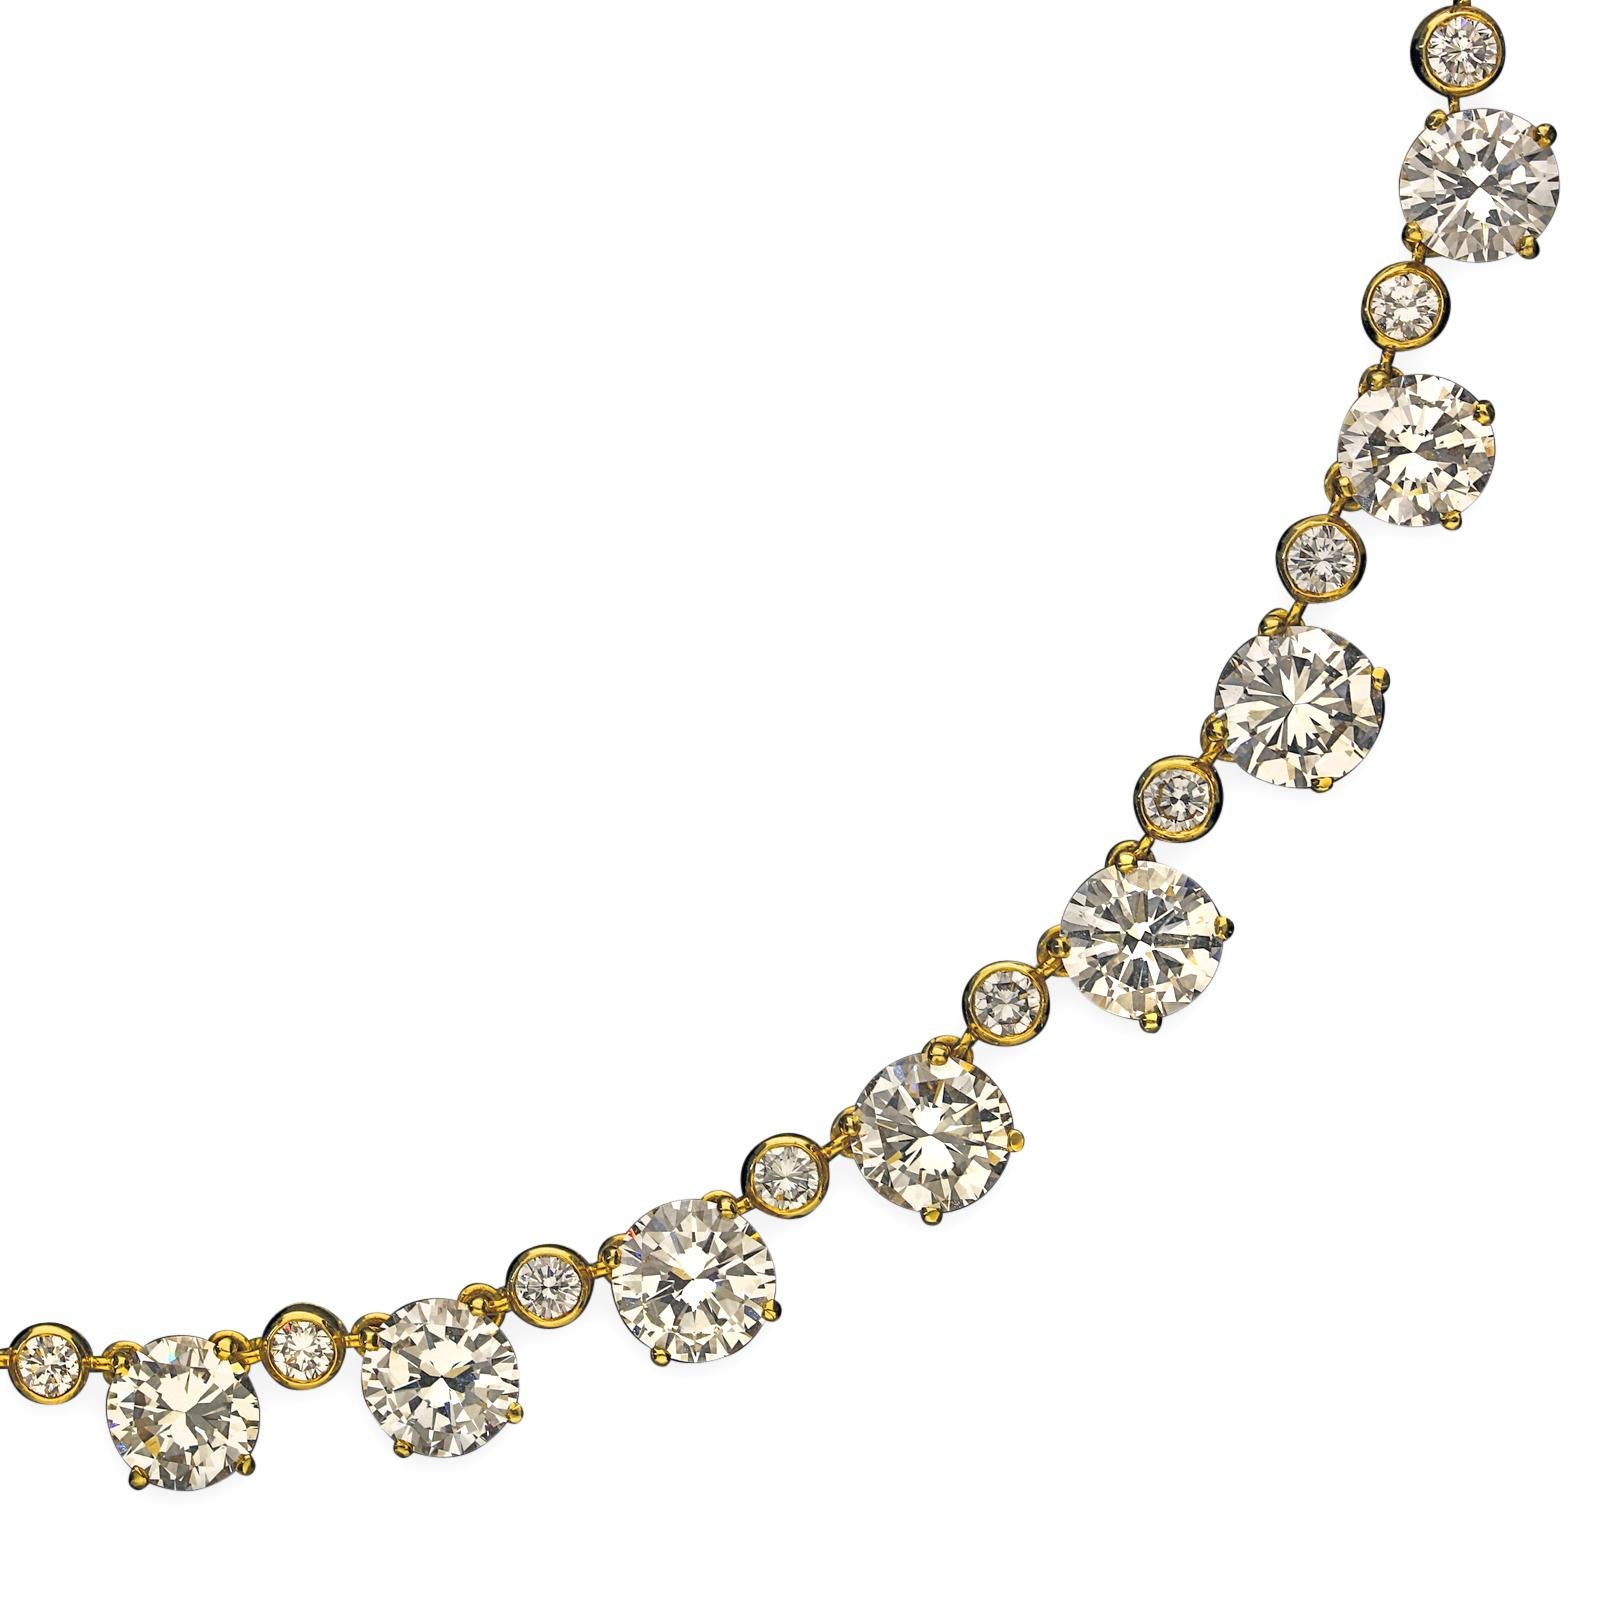 Brilliant Cut 41.49 Carat D-H Color Diamond Riviere Necklace in 18 Karat Gold, circa 1962